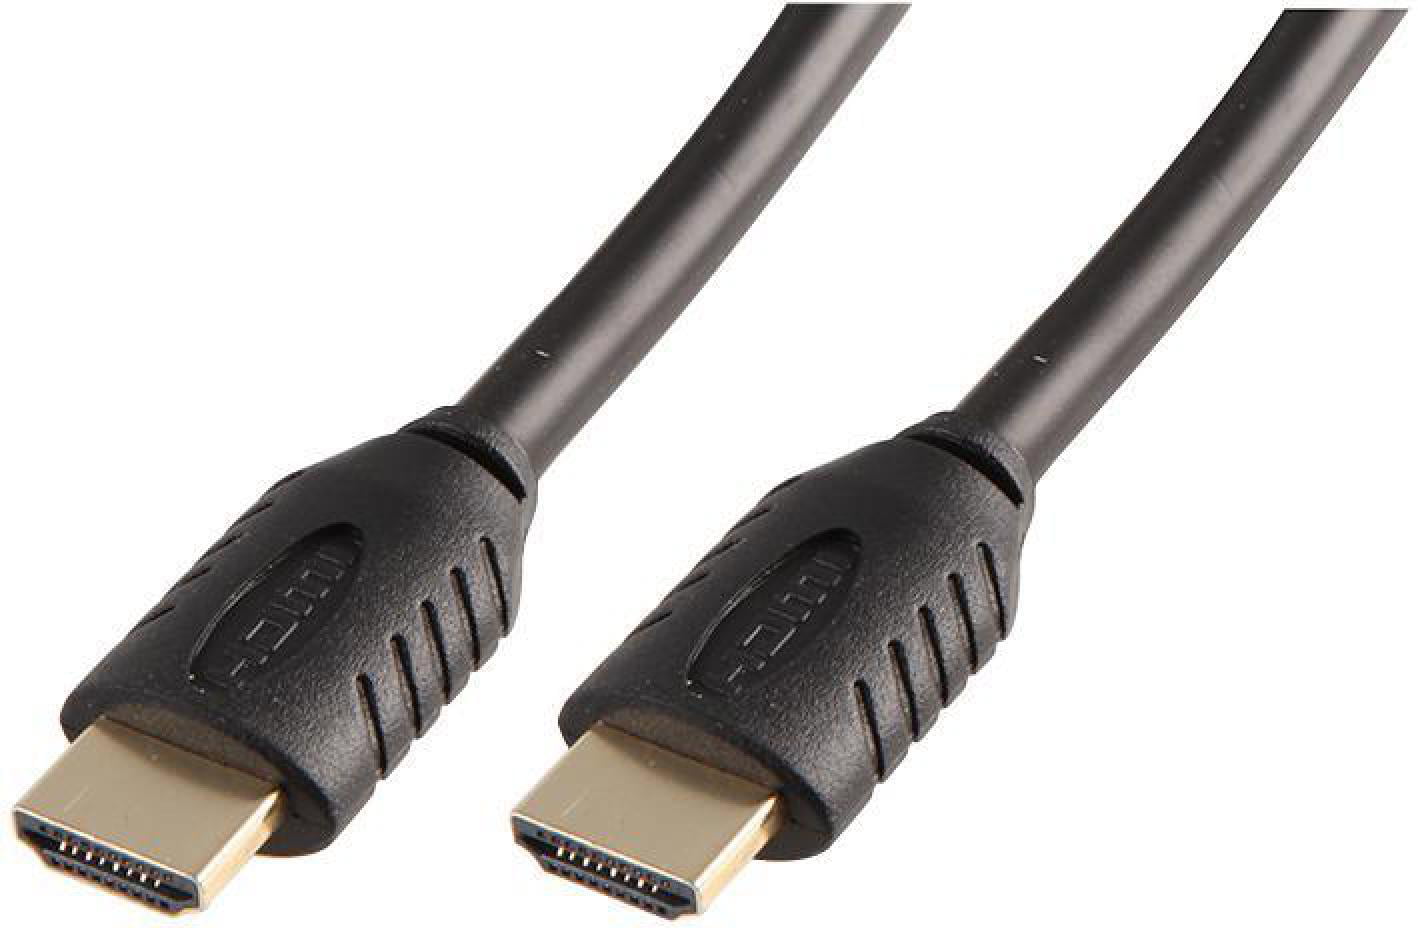 Tripp Lite High-Speed HDMI Cable HDMI Fiber Aoc 4k @60hz 4:4:4 Black M/m 30m  - HDMI Cable - HDMI Male to HDMI Male - 98 Ft - Fiber Optic - Black -  Active 